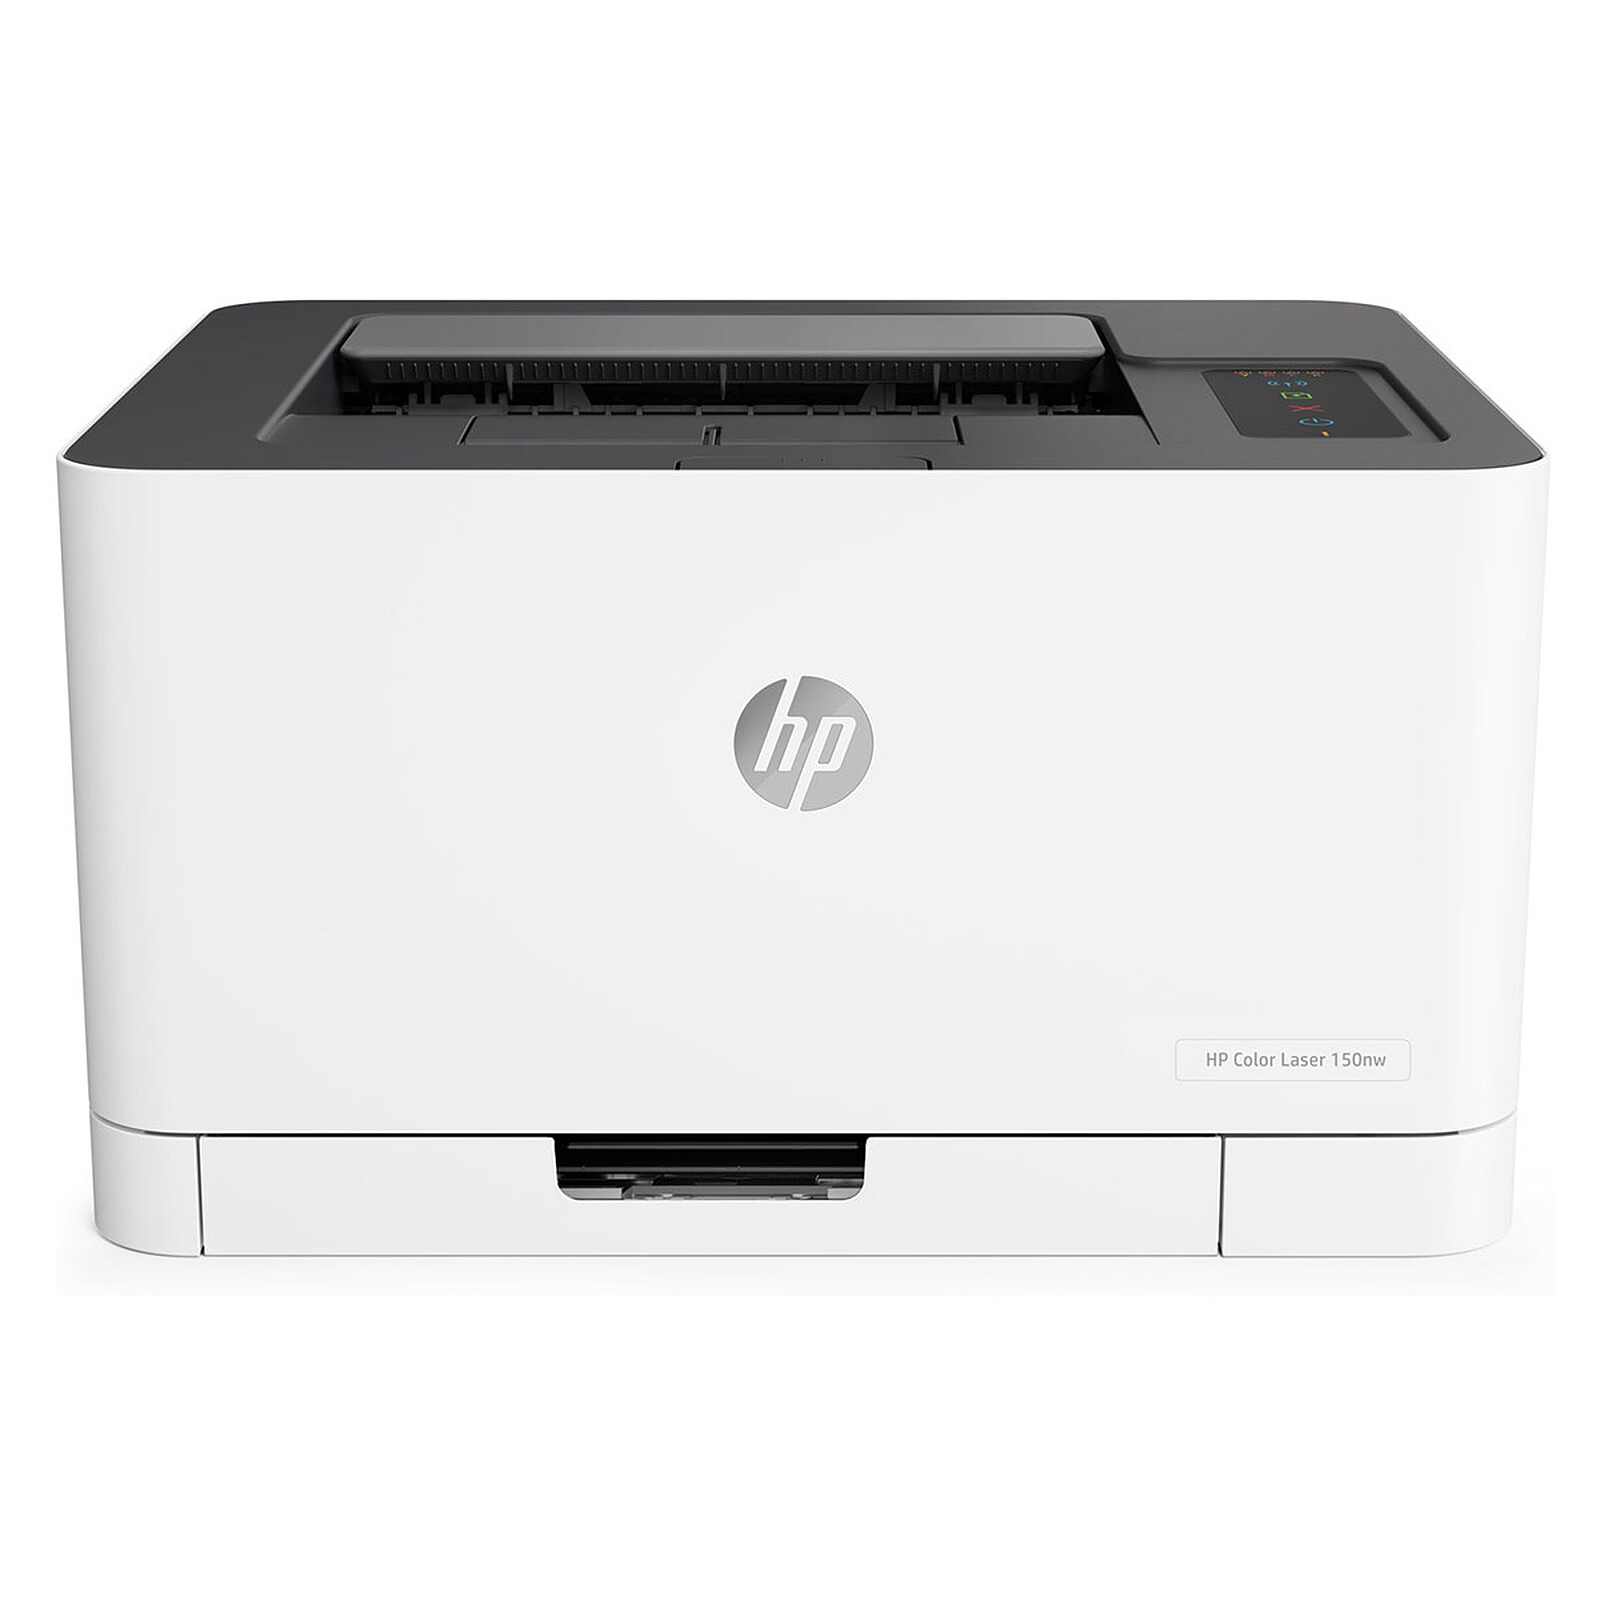 Kunstig skrivning skuffe HP Color Laser 150nw - Laser printer - LDLC 3-year warranty